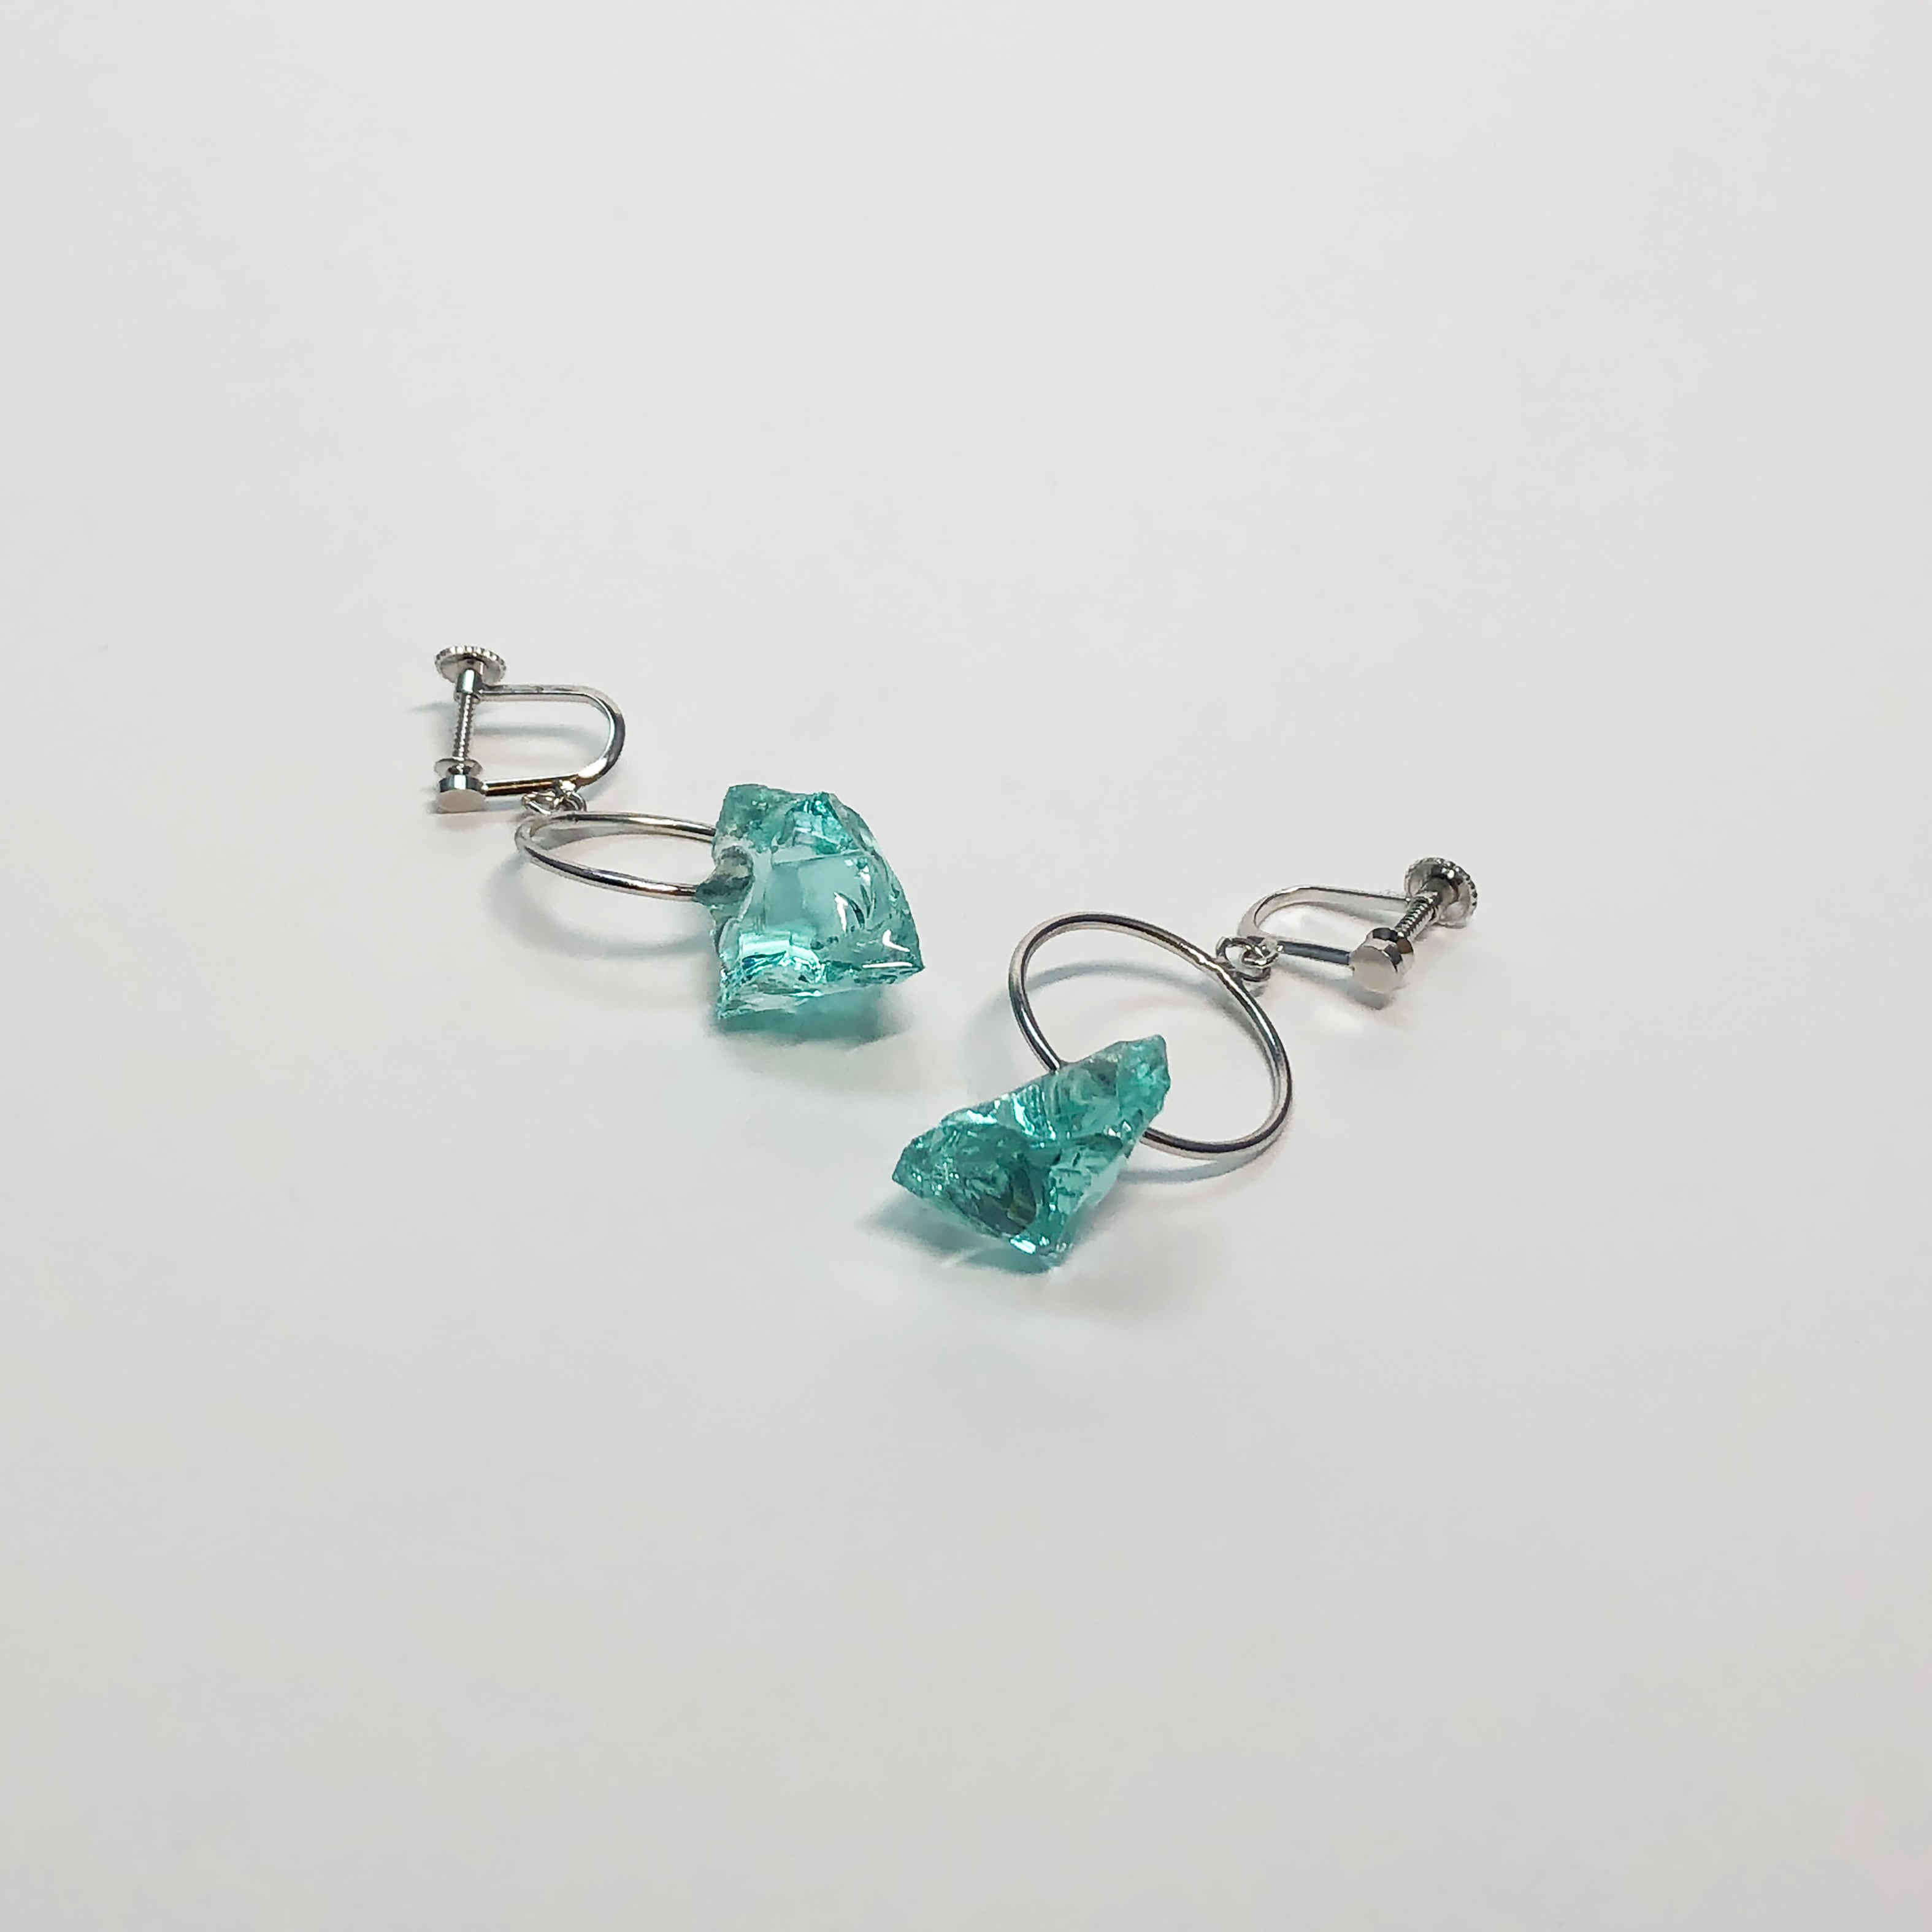 【ONLINE shop限定】FRAGMENT earring 10